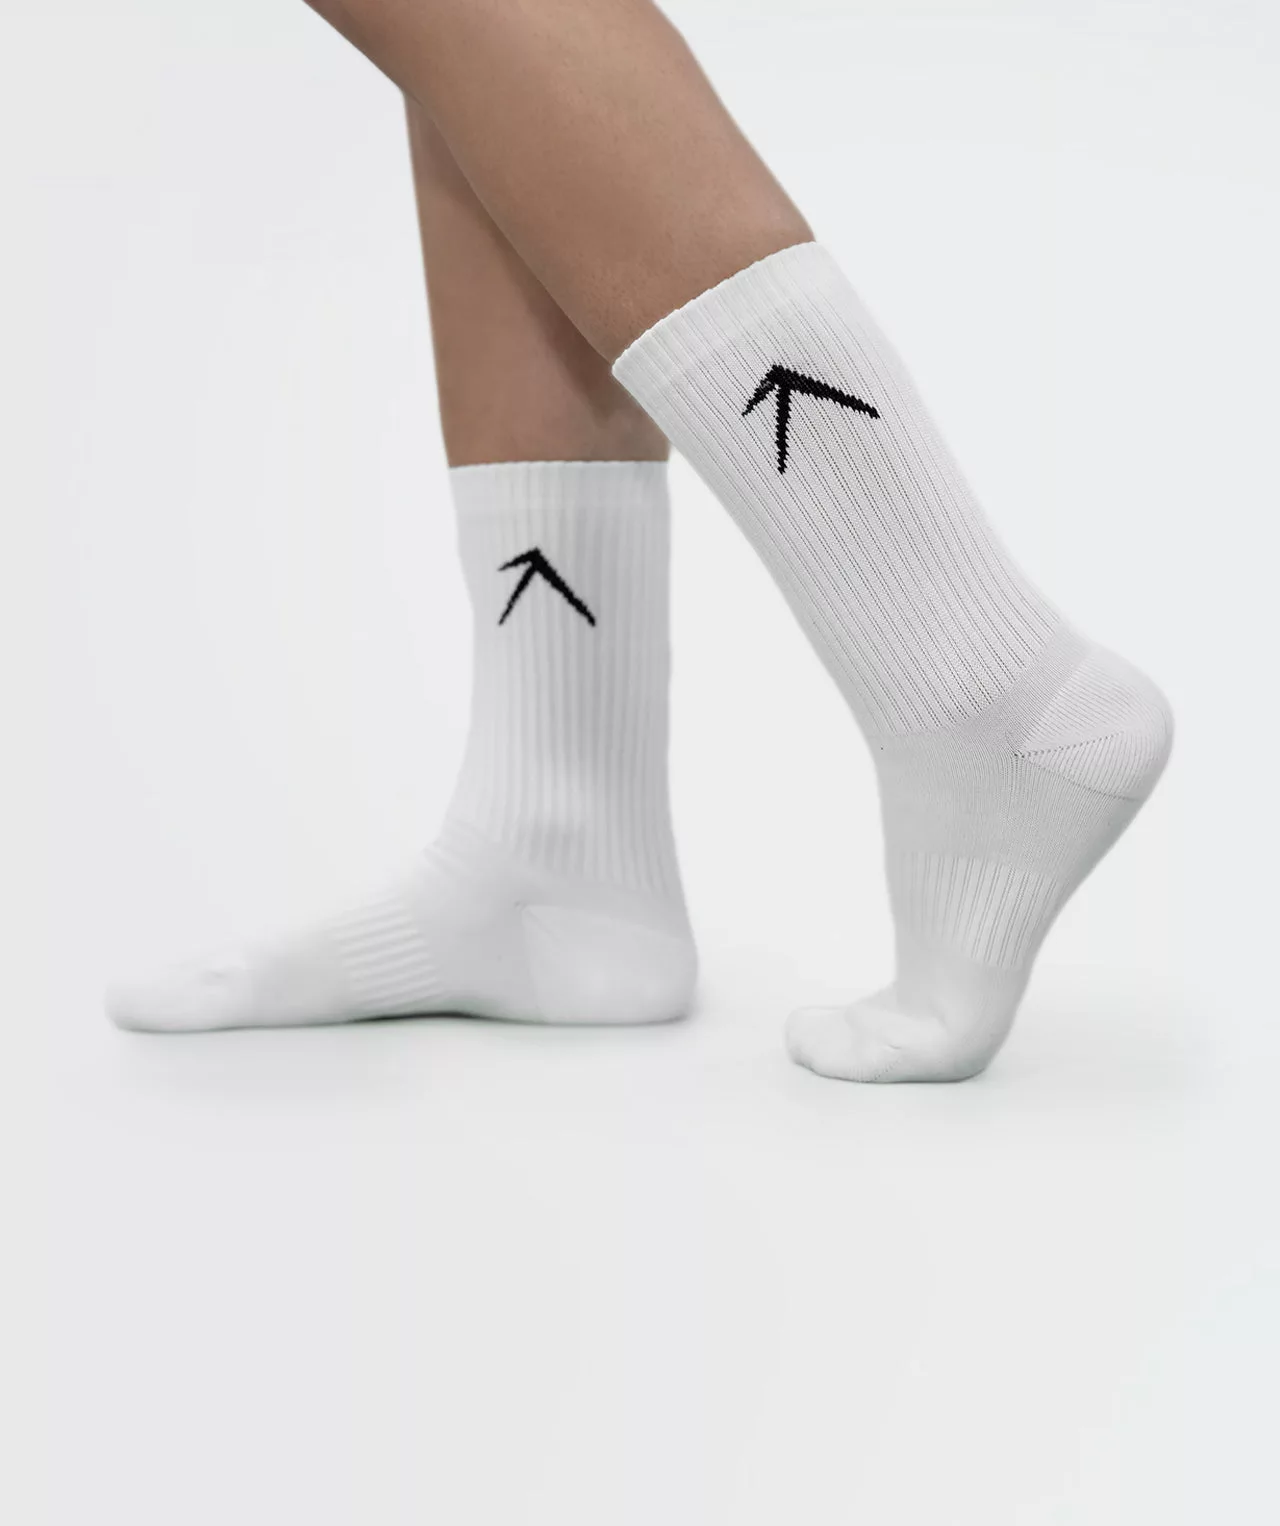 Unisex Crew Dry Touch Socks - Pack of 3 White Main Image